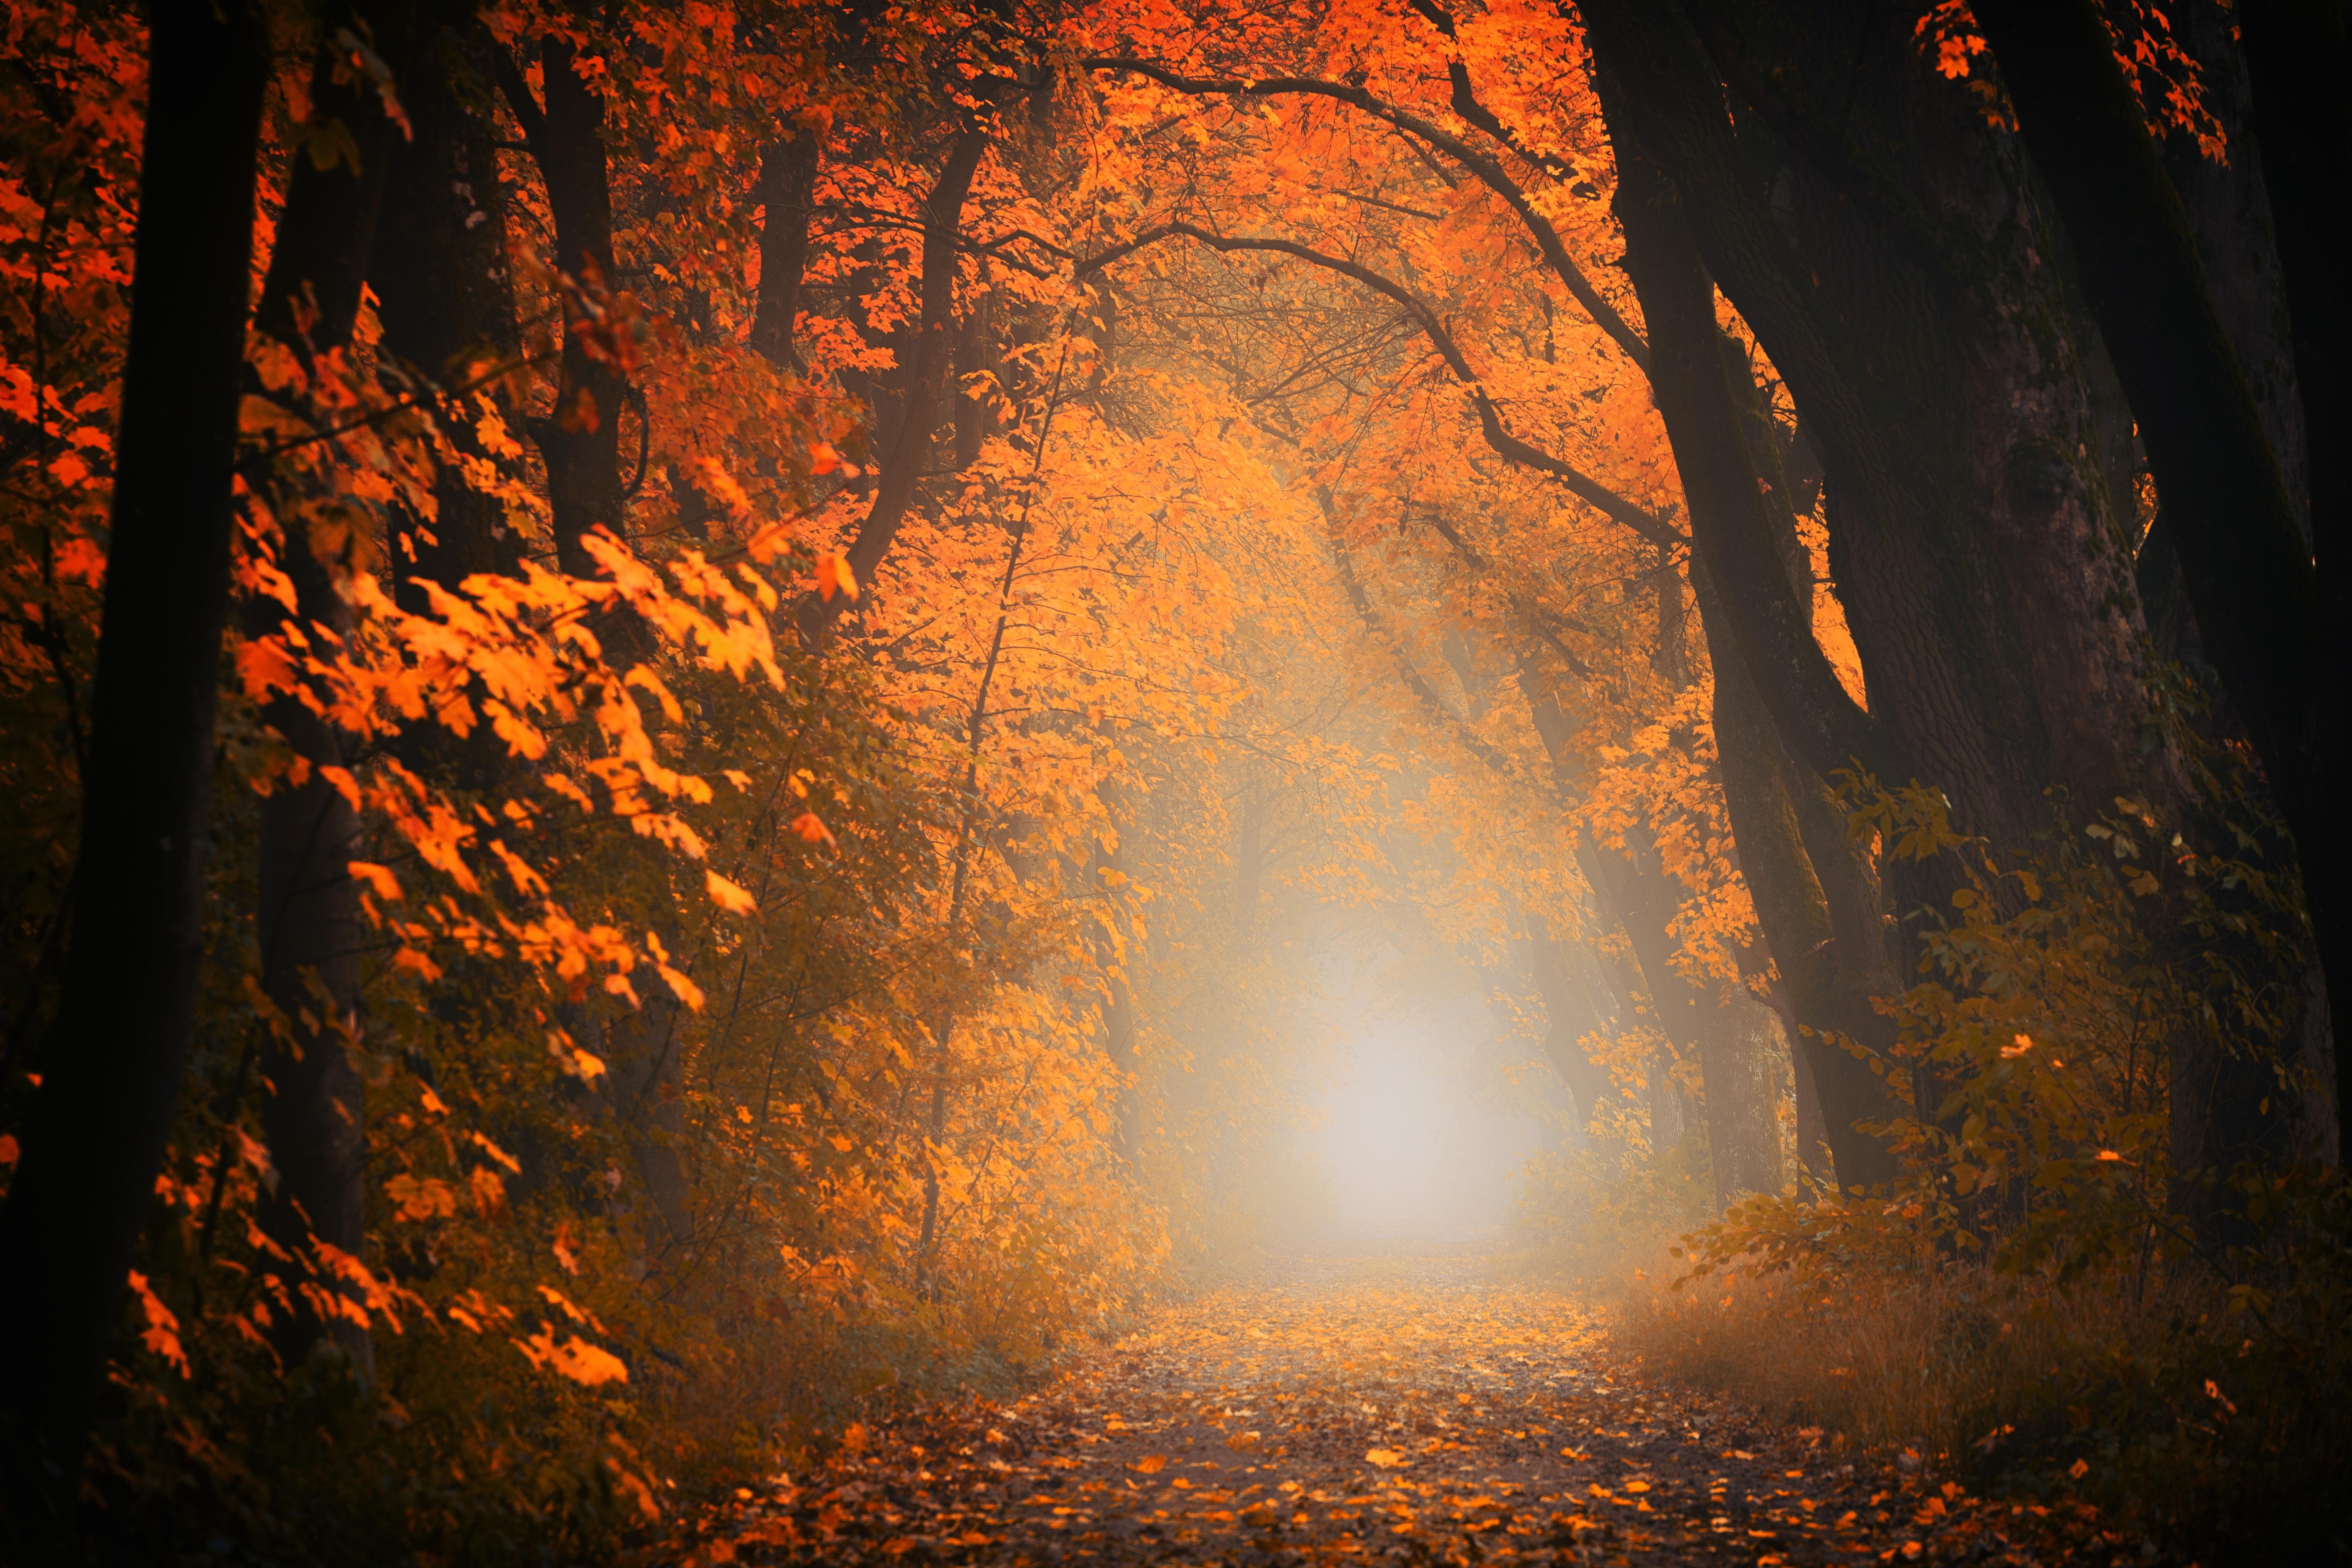 Download wallpaper 5858x3905 autumn, fog, forest, foliage